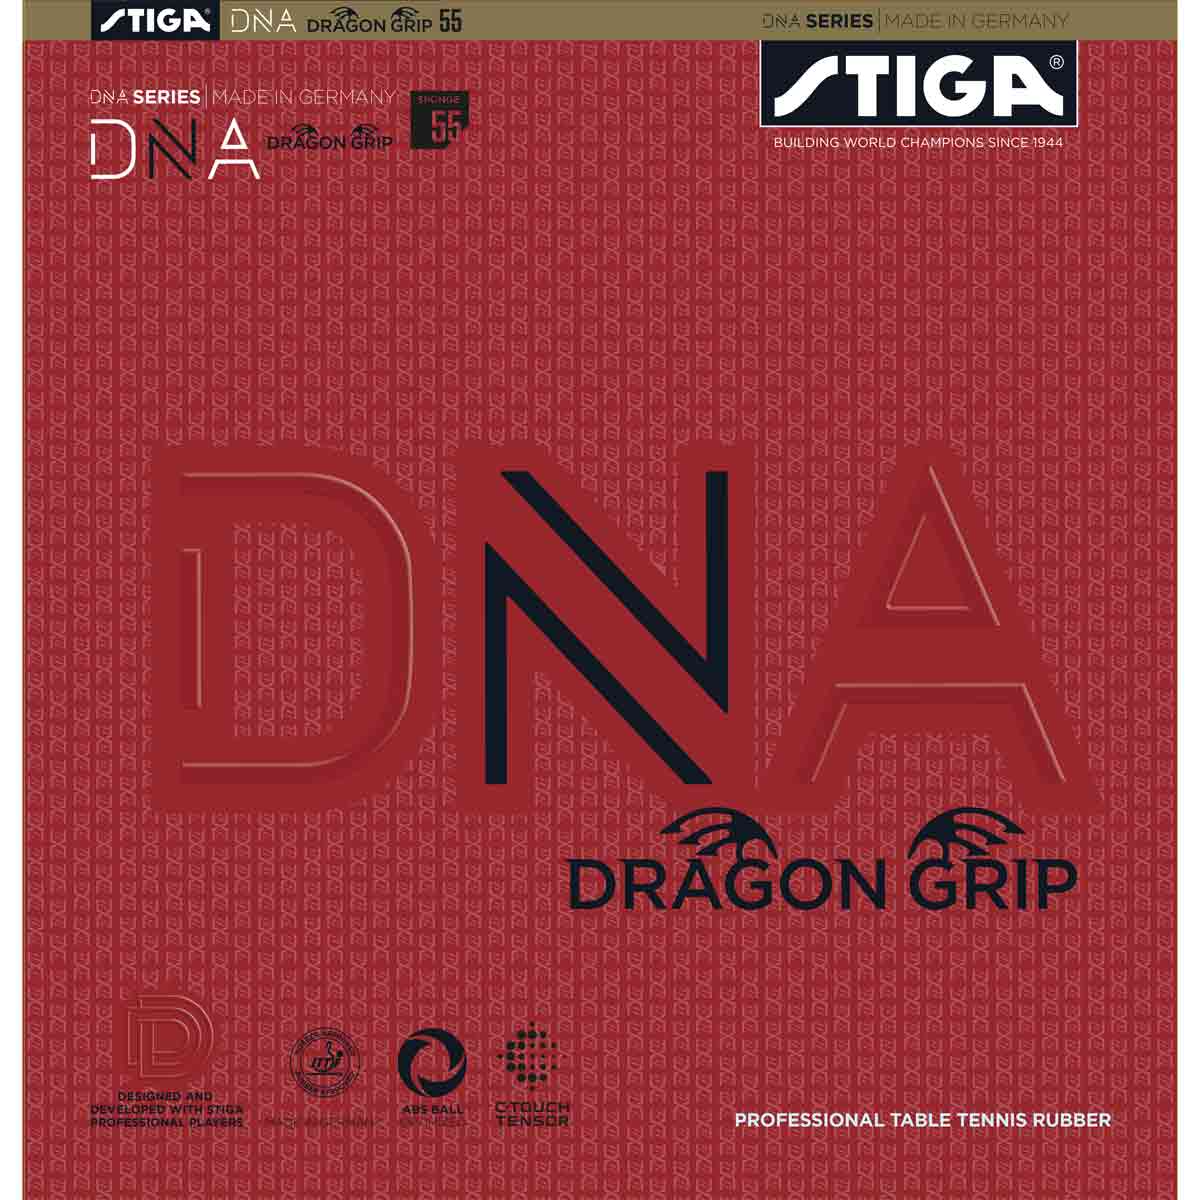 Stiga Belag DNA Dragon Grip 55